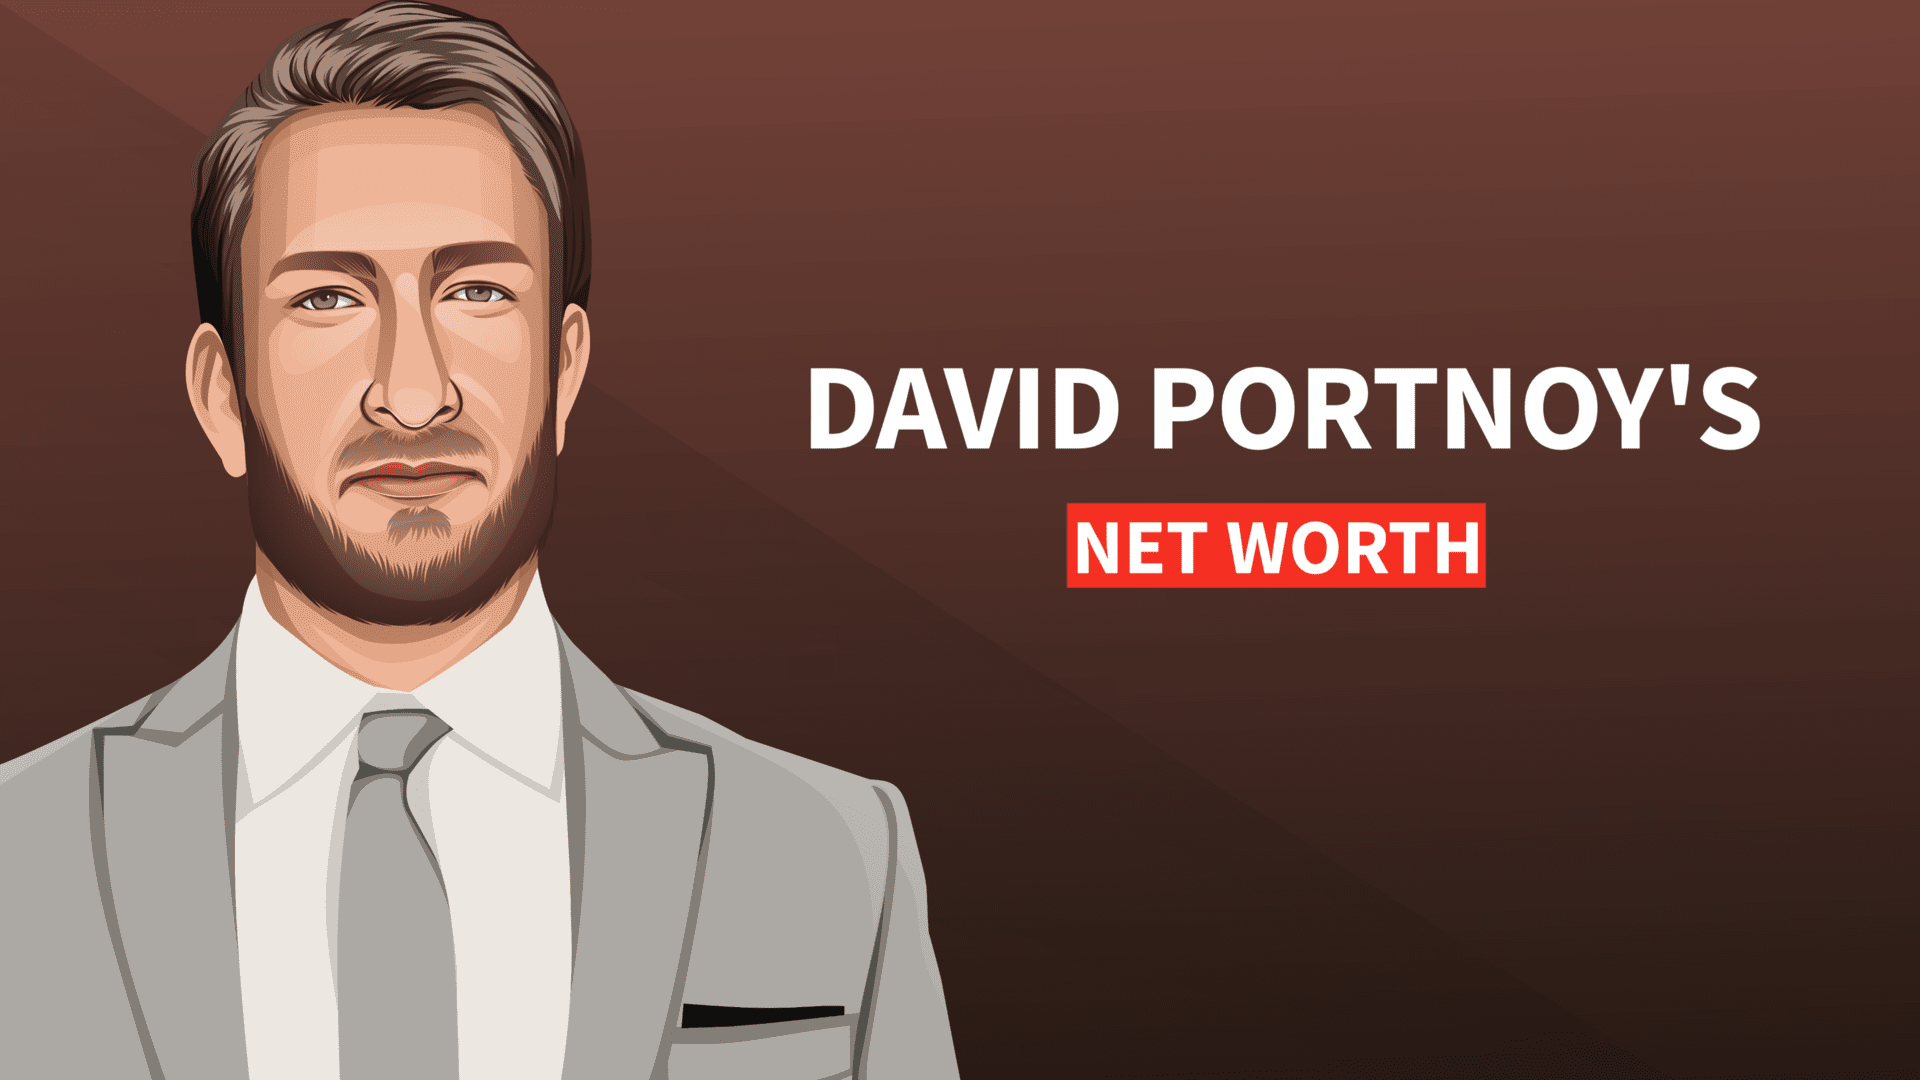 Dave Portnoy's Net Worth and Inspiring Story